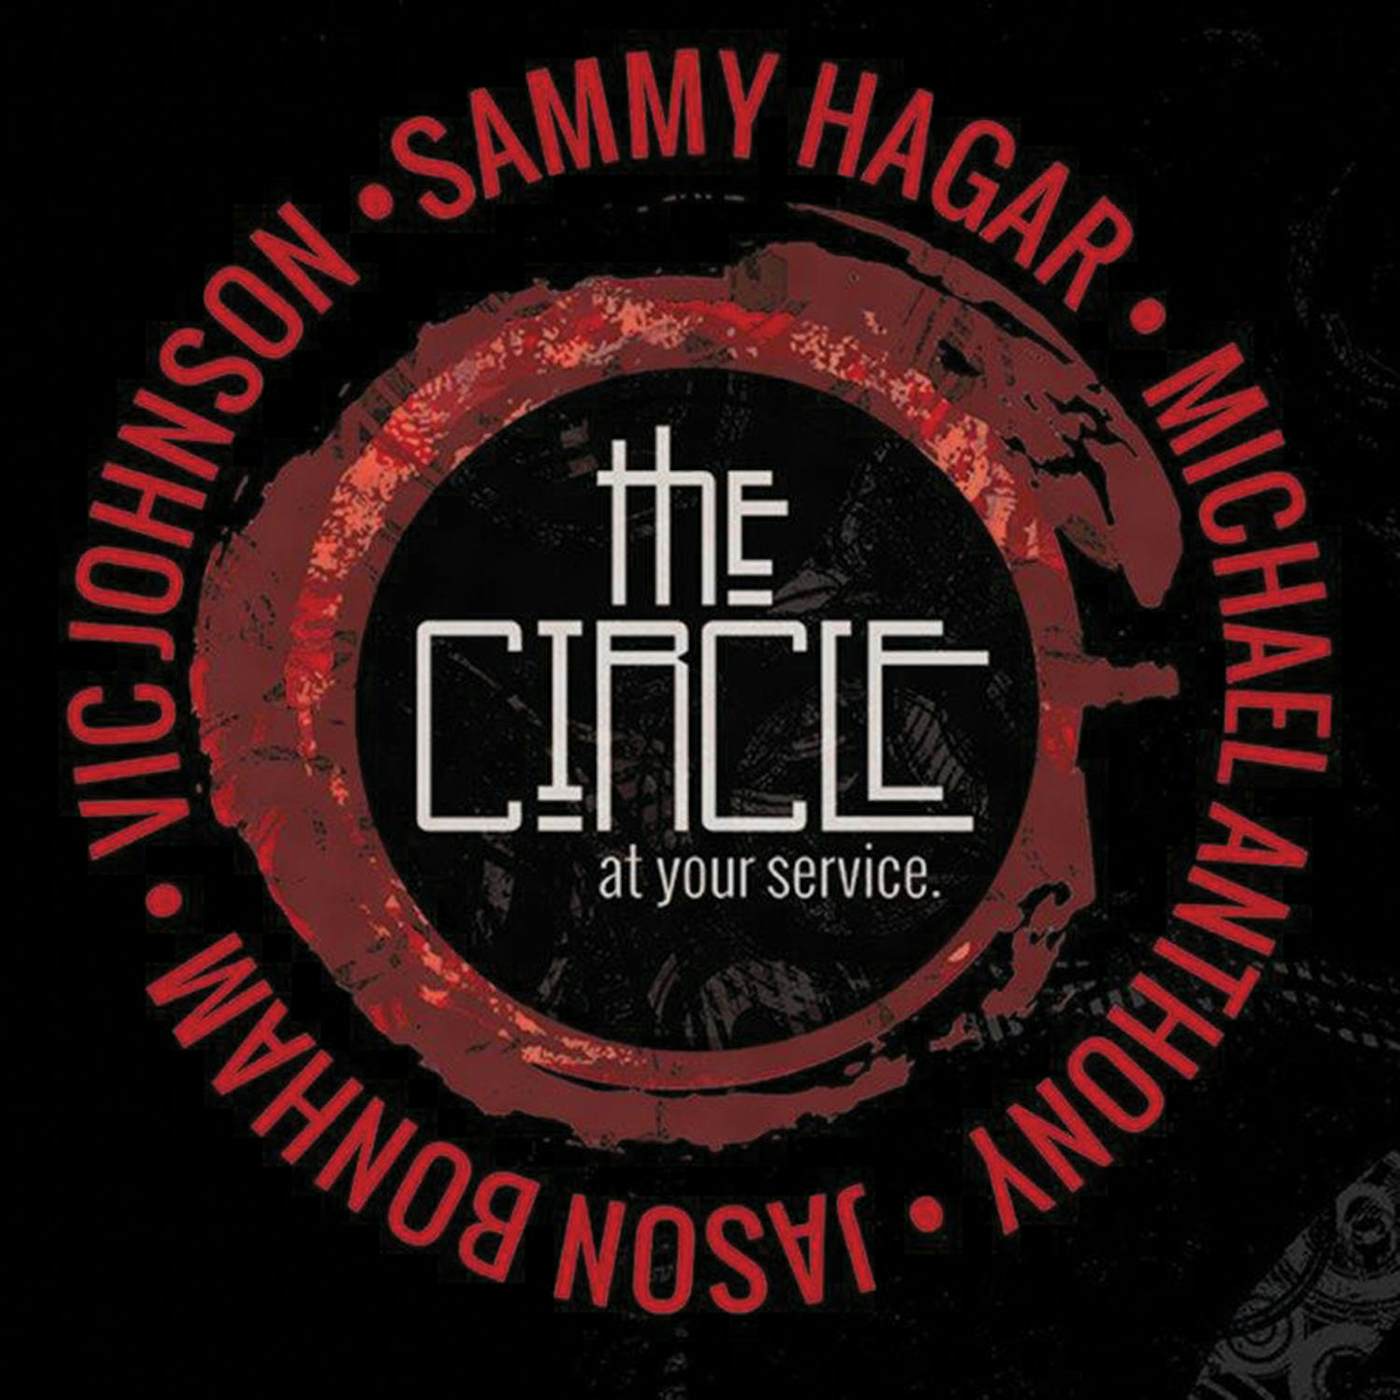 Sammy Hagar AT YOUR SERVICE CD